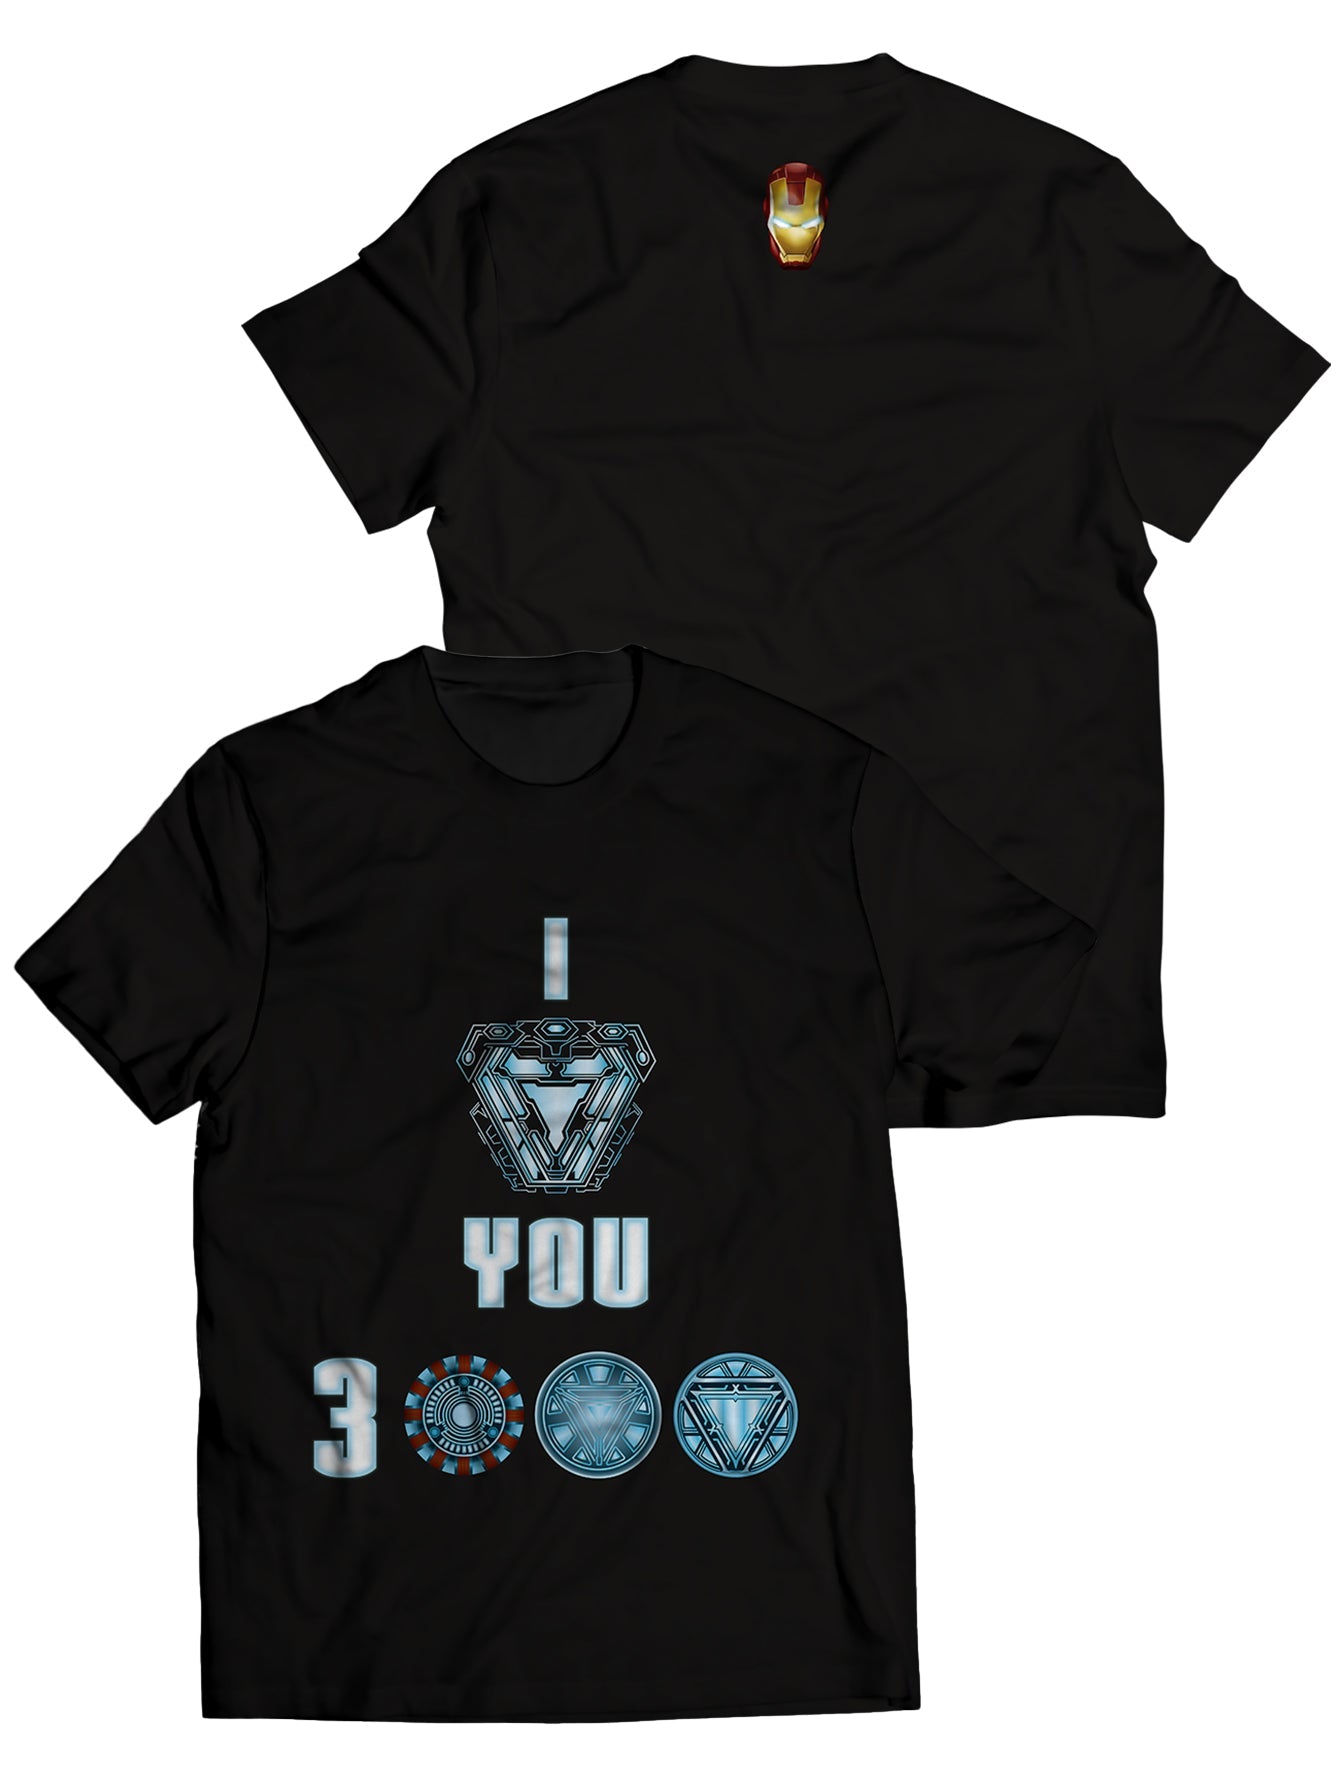 Fandomaniax - Tony Stark Love You 3000 Limited Edition Glow in the Dark T-Shirt